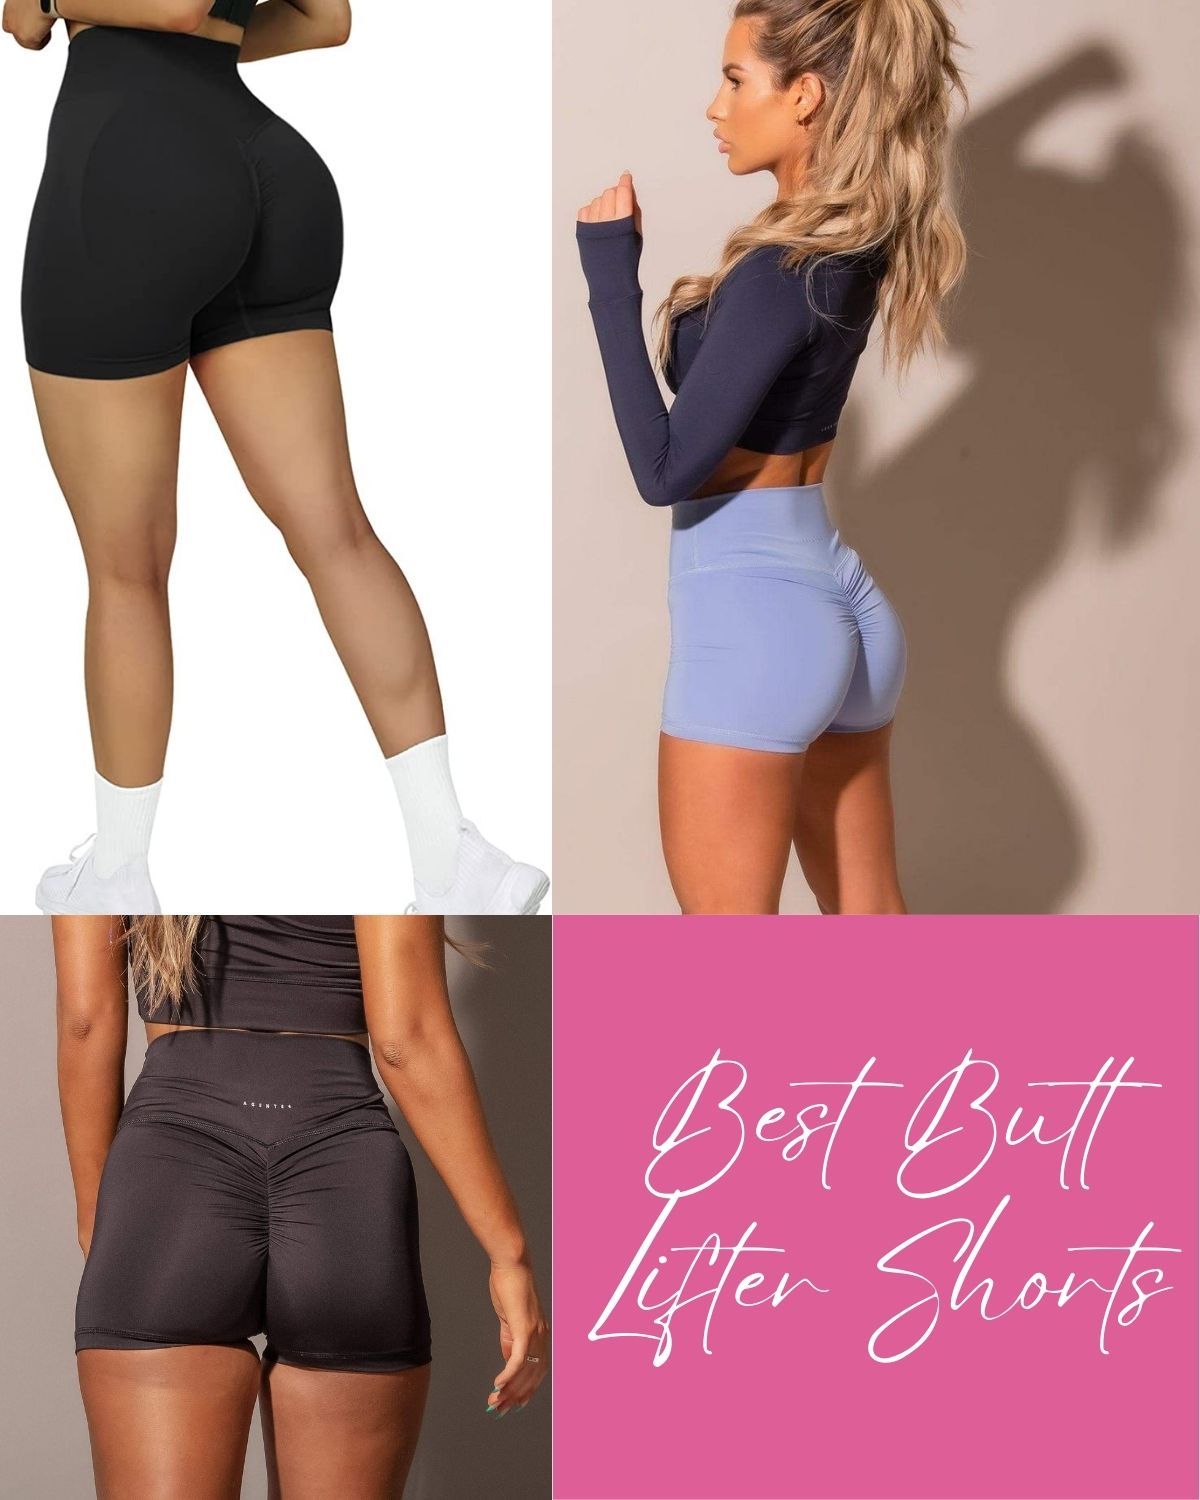 Three great butt lifter shorts 